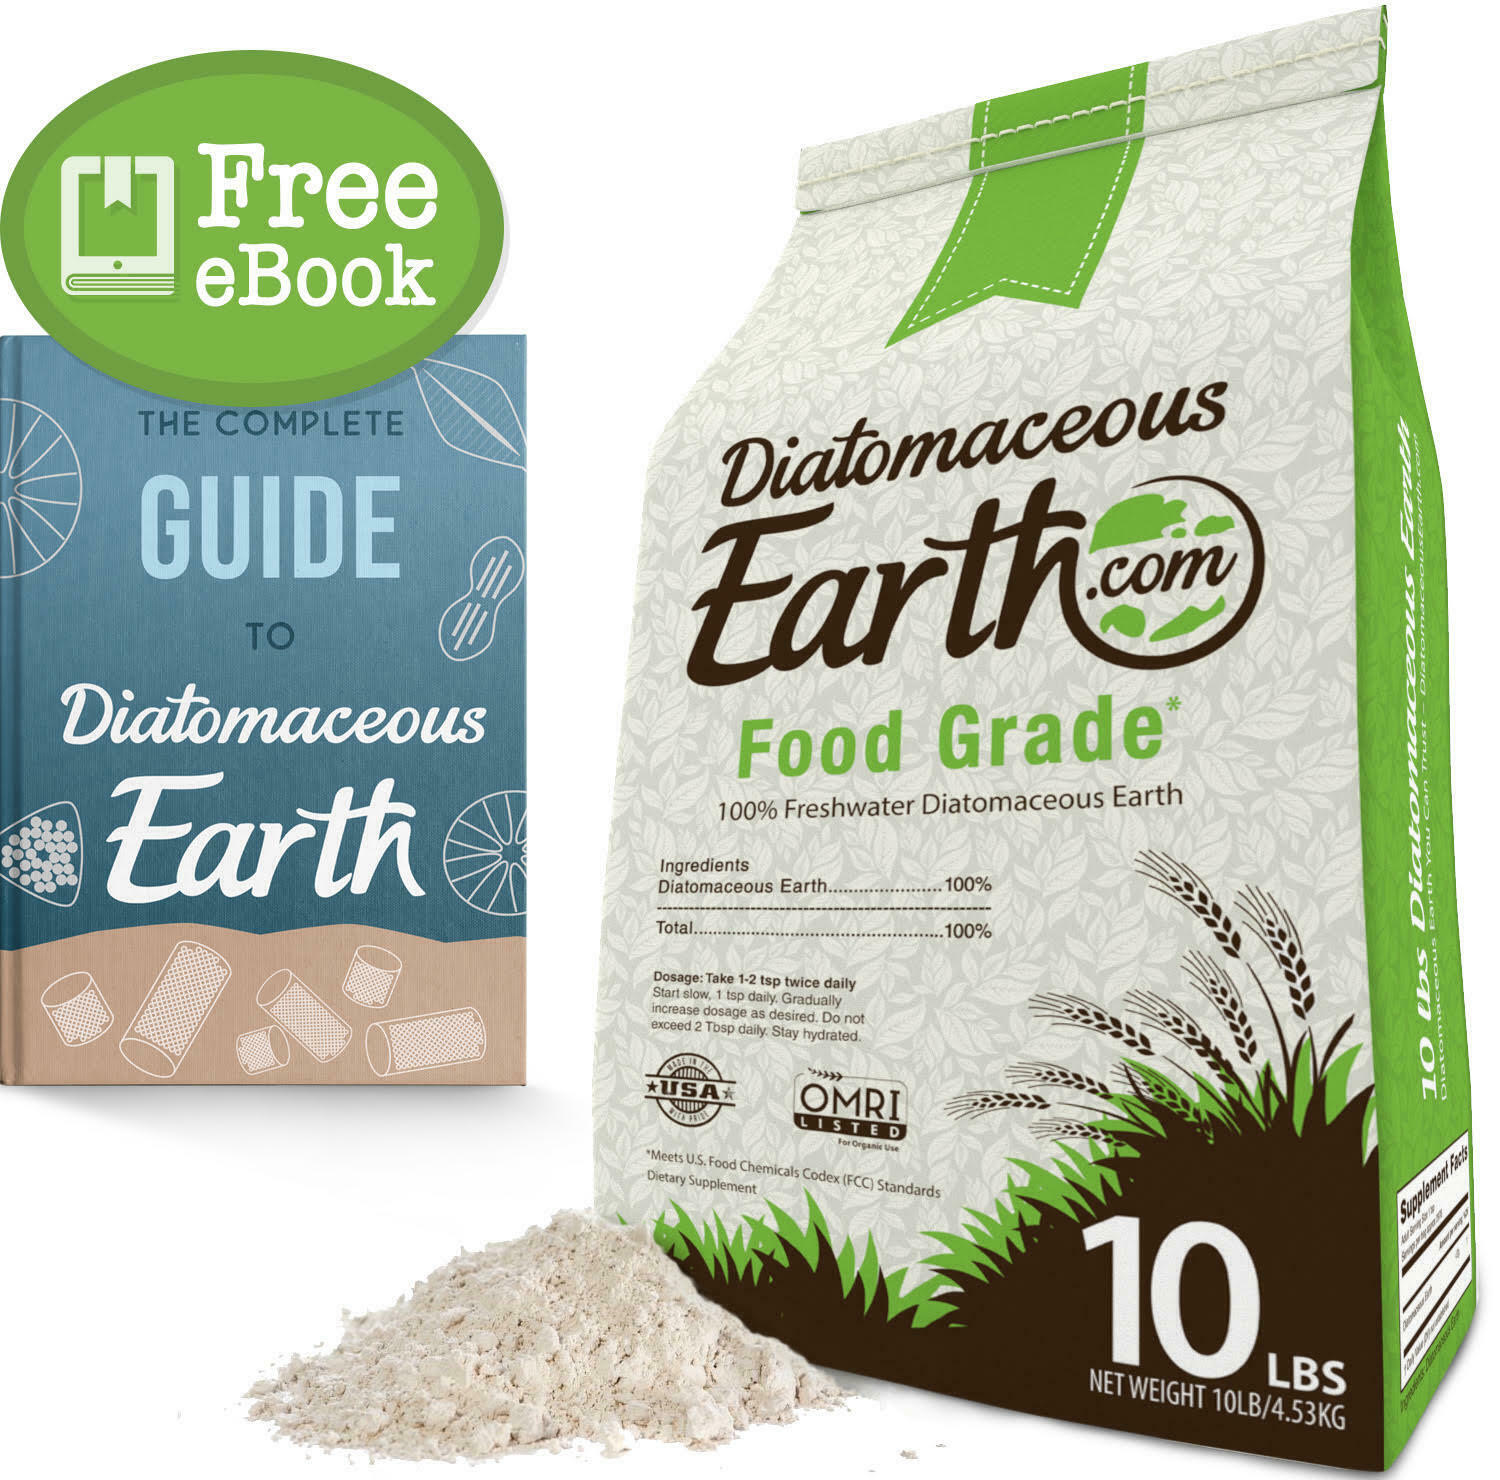 10 Lbs Diatomaceous Earth - 100% Organic Food Grade Diamateous Earth Powder